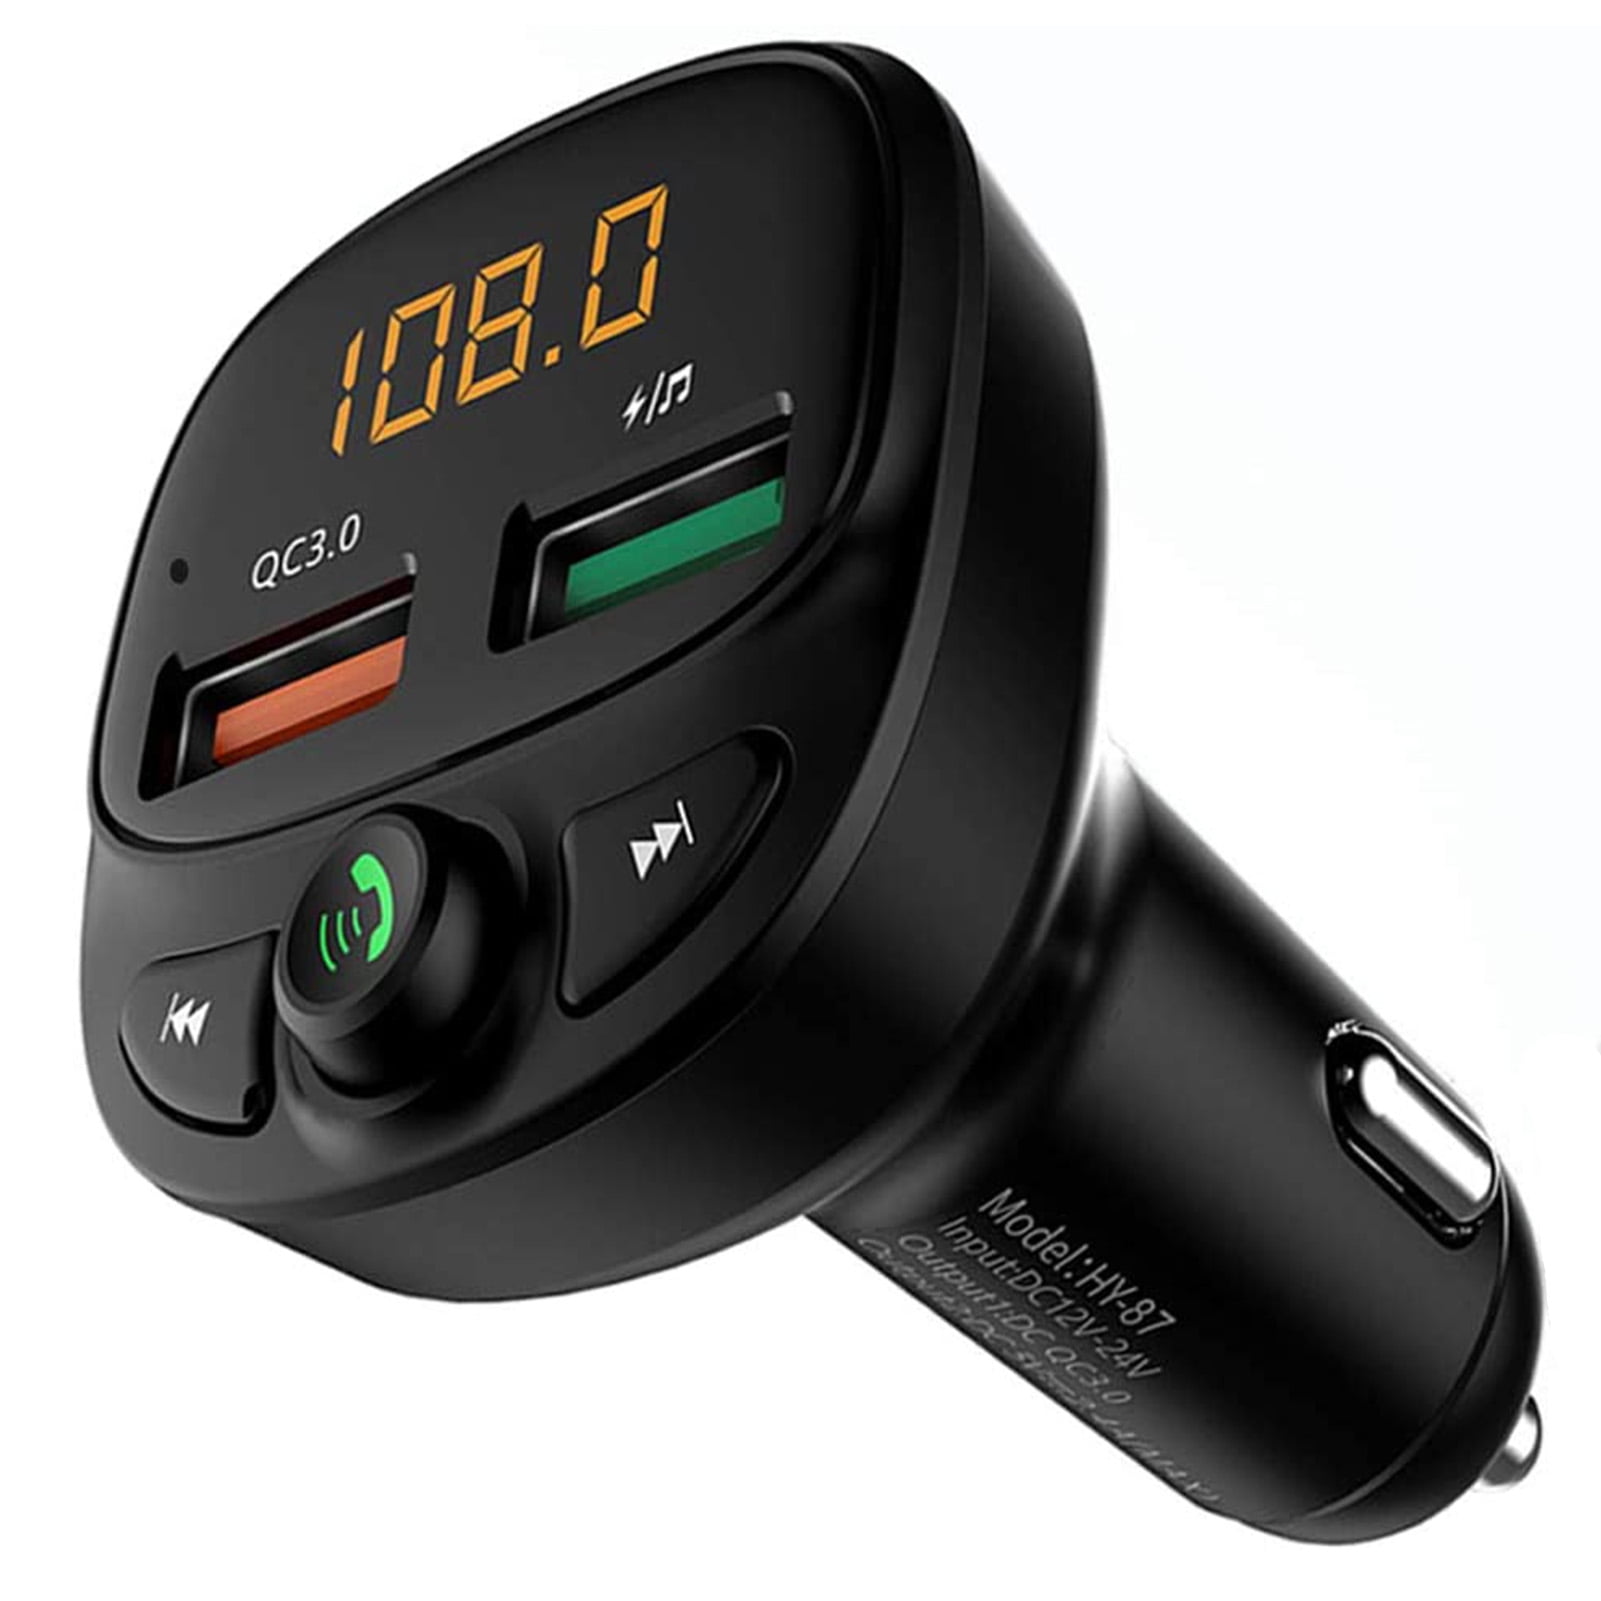 Universal Car Bluetooth FM Transmitter MP3 Radio Player USB Charger Car Kit F2